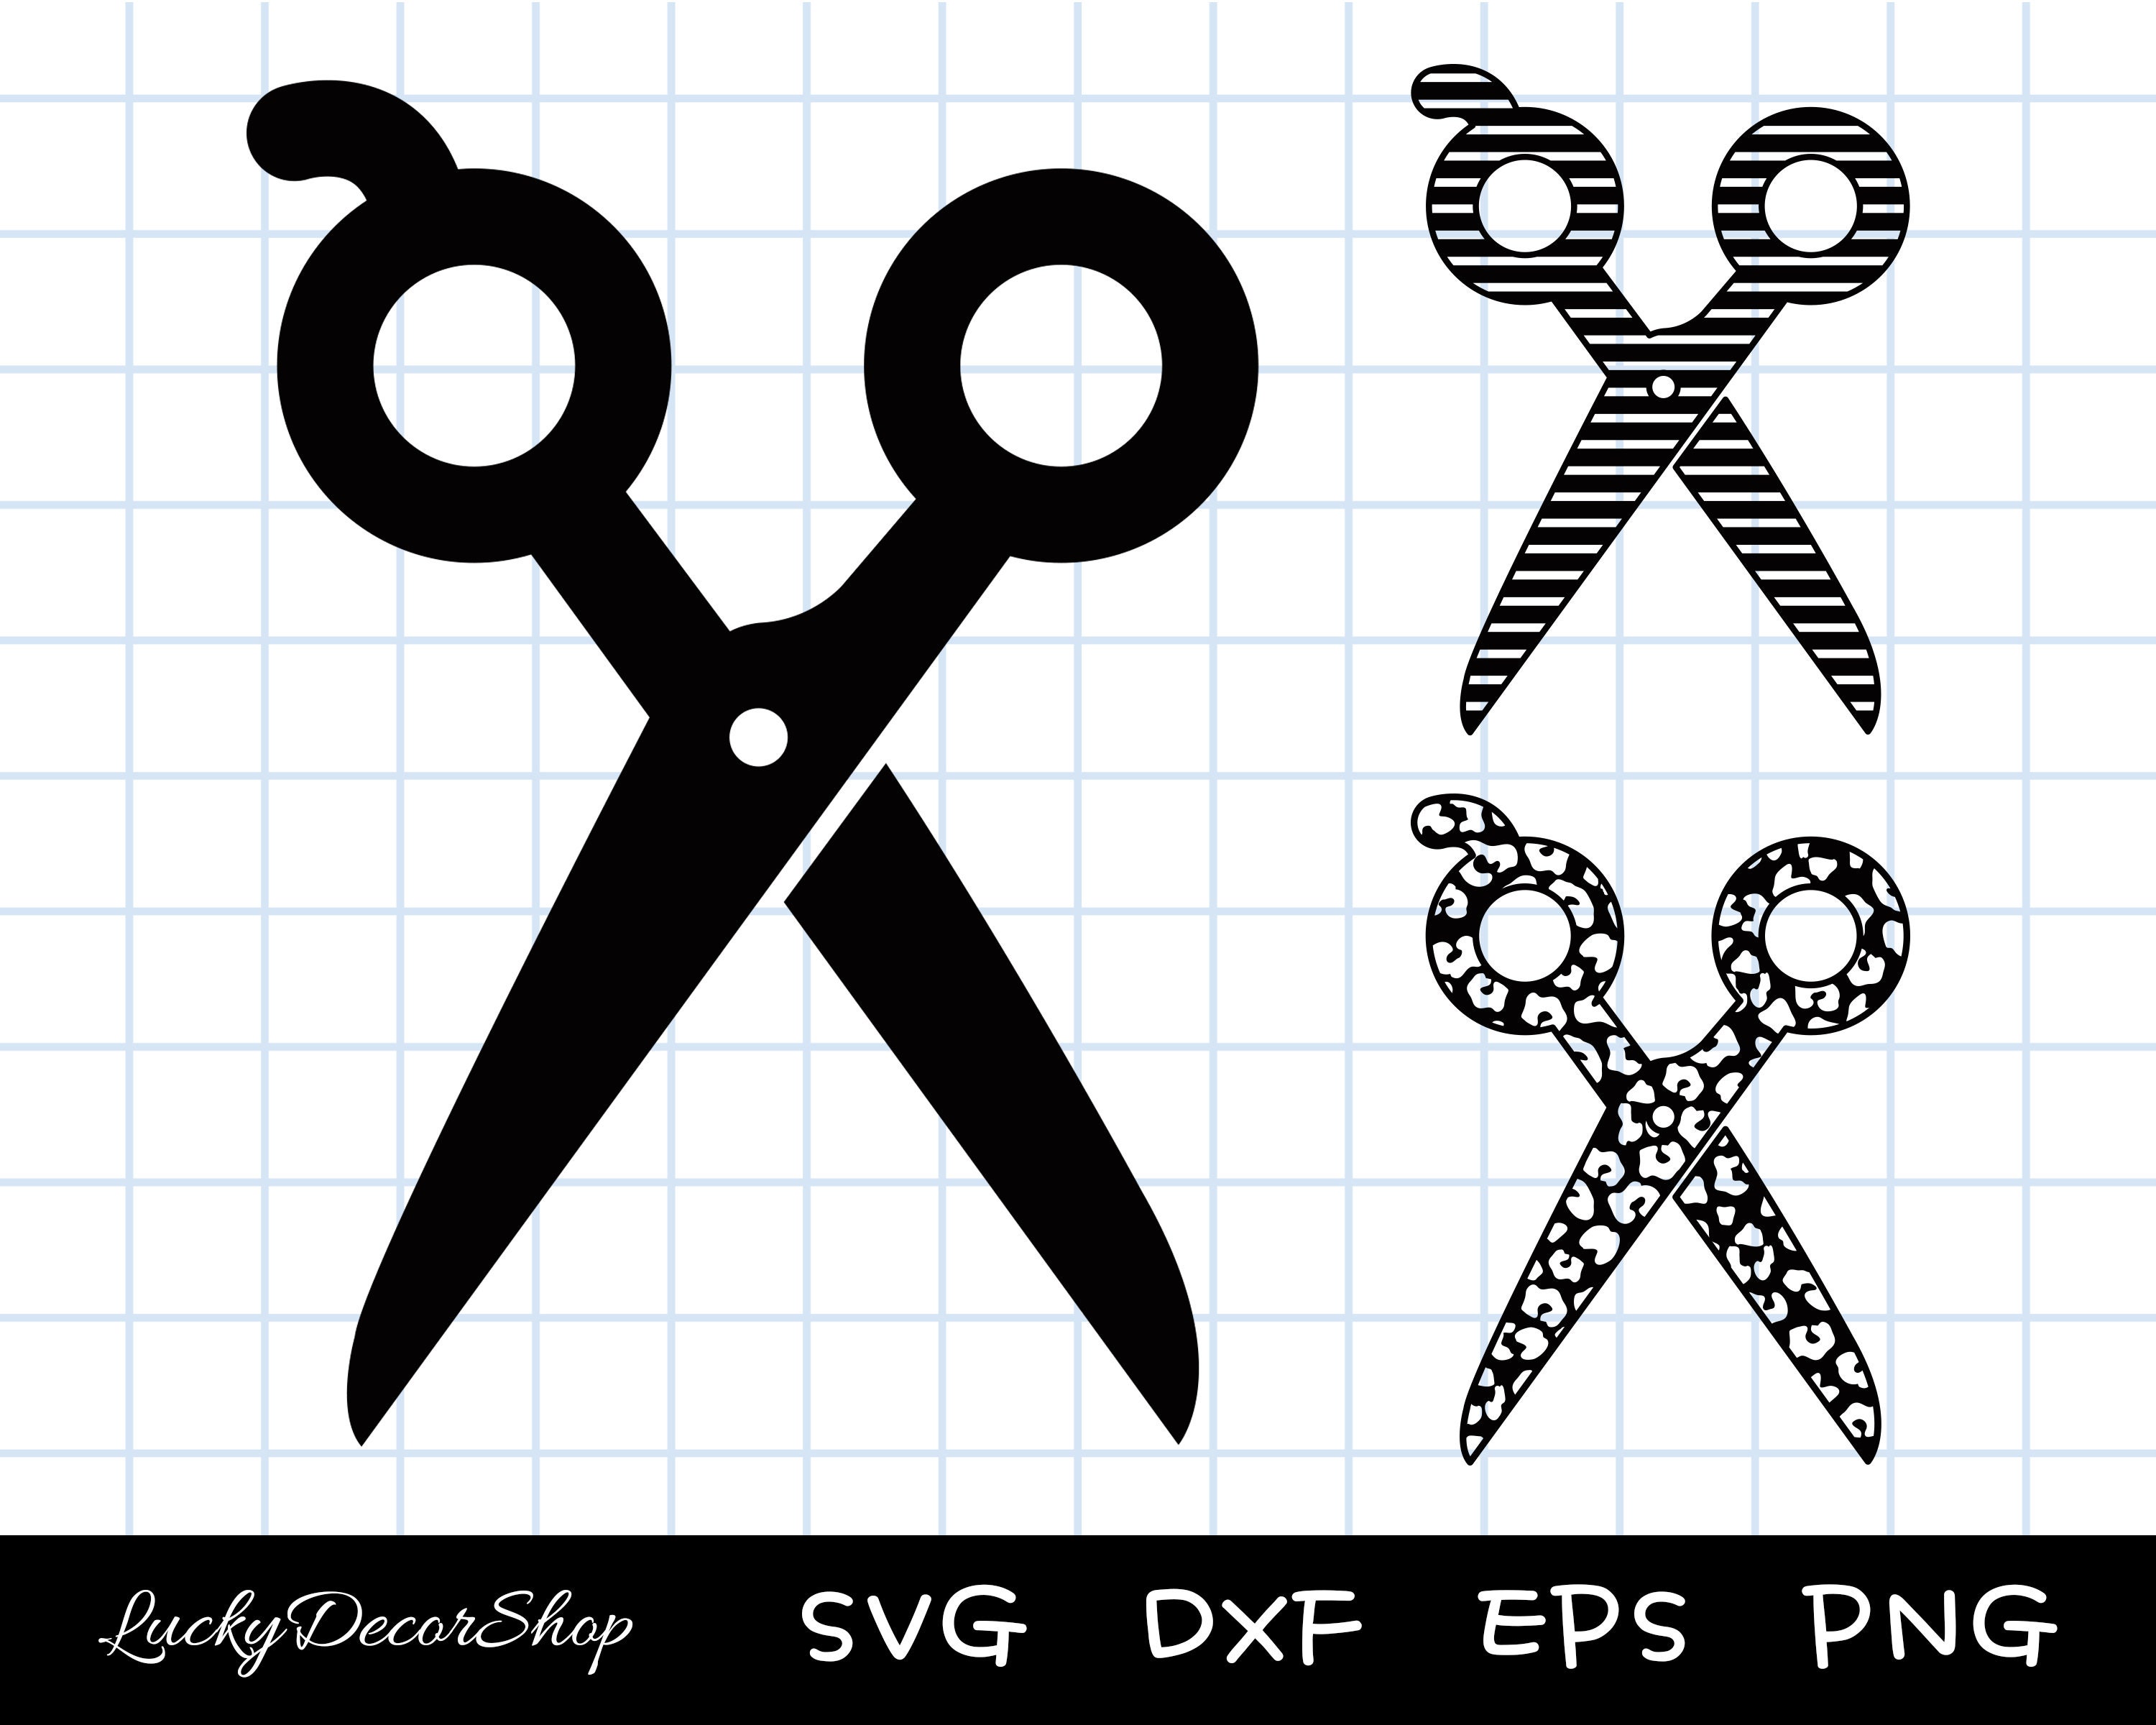 Comb and Scissors SVG file - SVG Designs | SVGDesigns.com